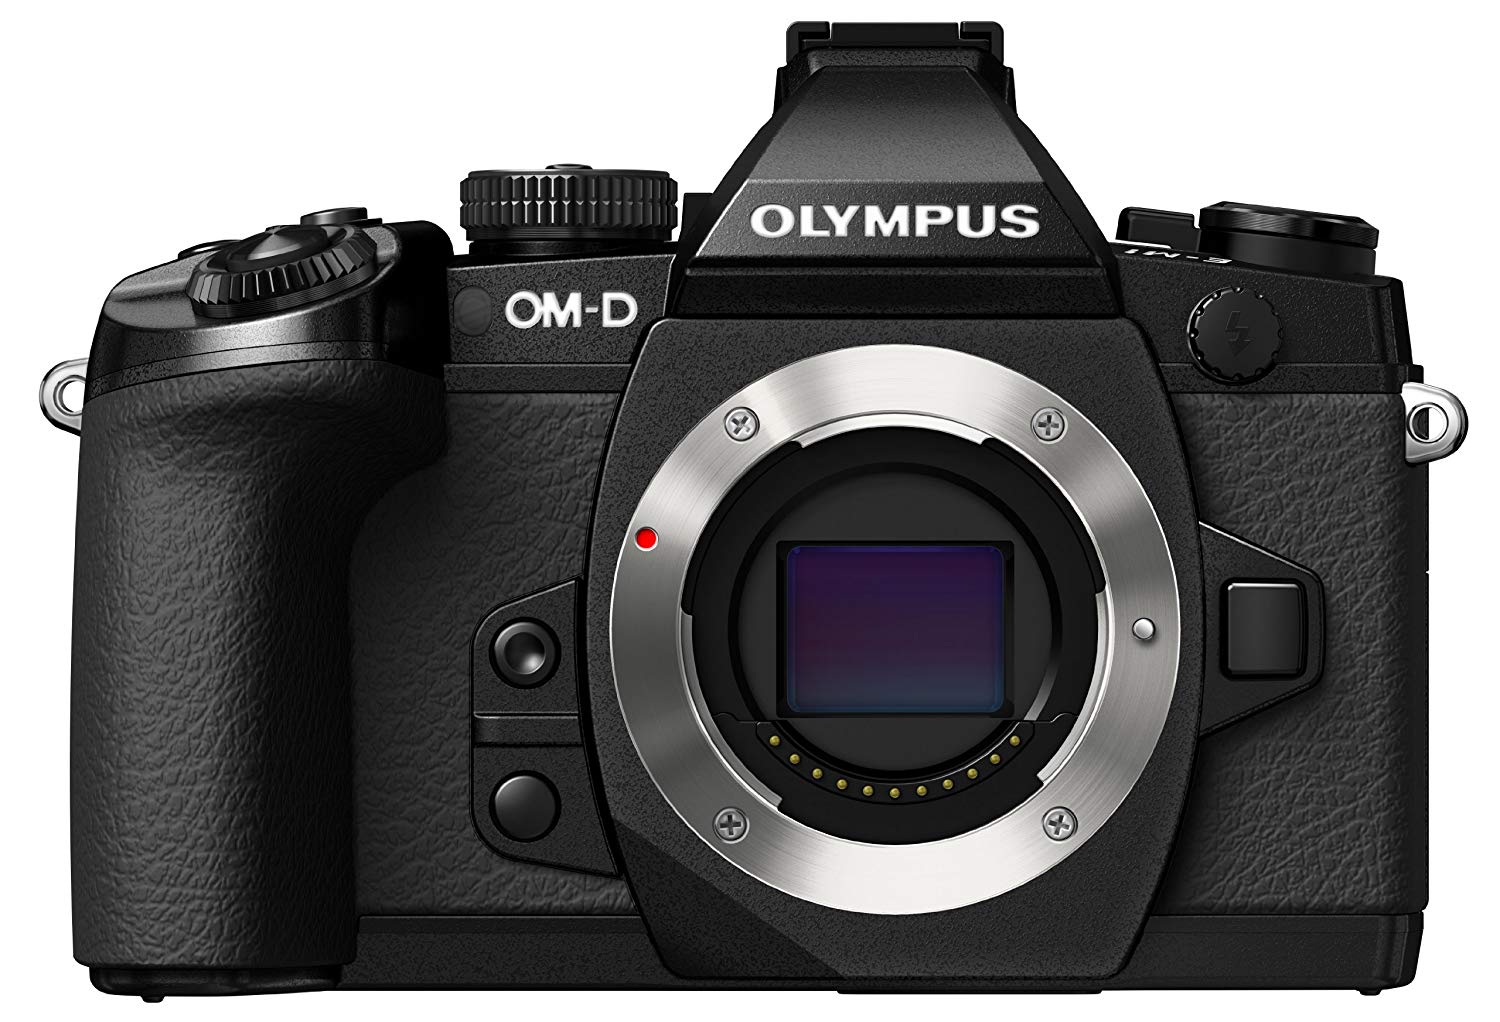 Olympus كاميرا OM-D E-M1 الرقمية بدون مرآة بدقة 16 ميجابكسل و 3 بوصات LCD (الهيكل فقط) (أسود)